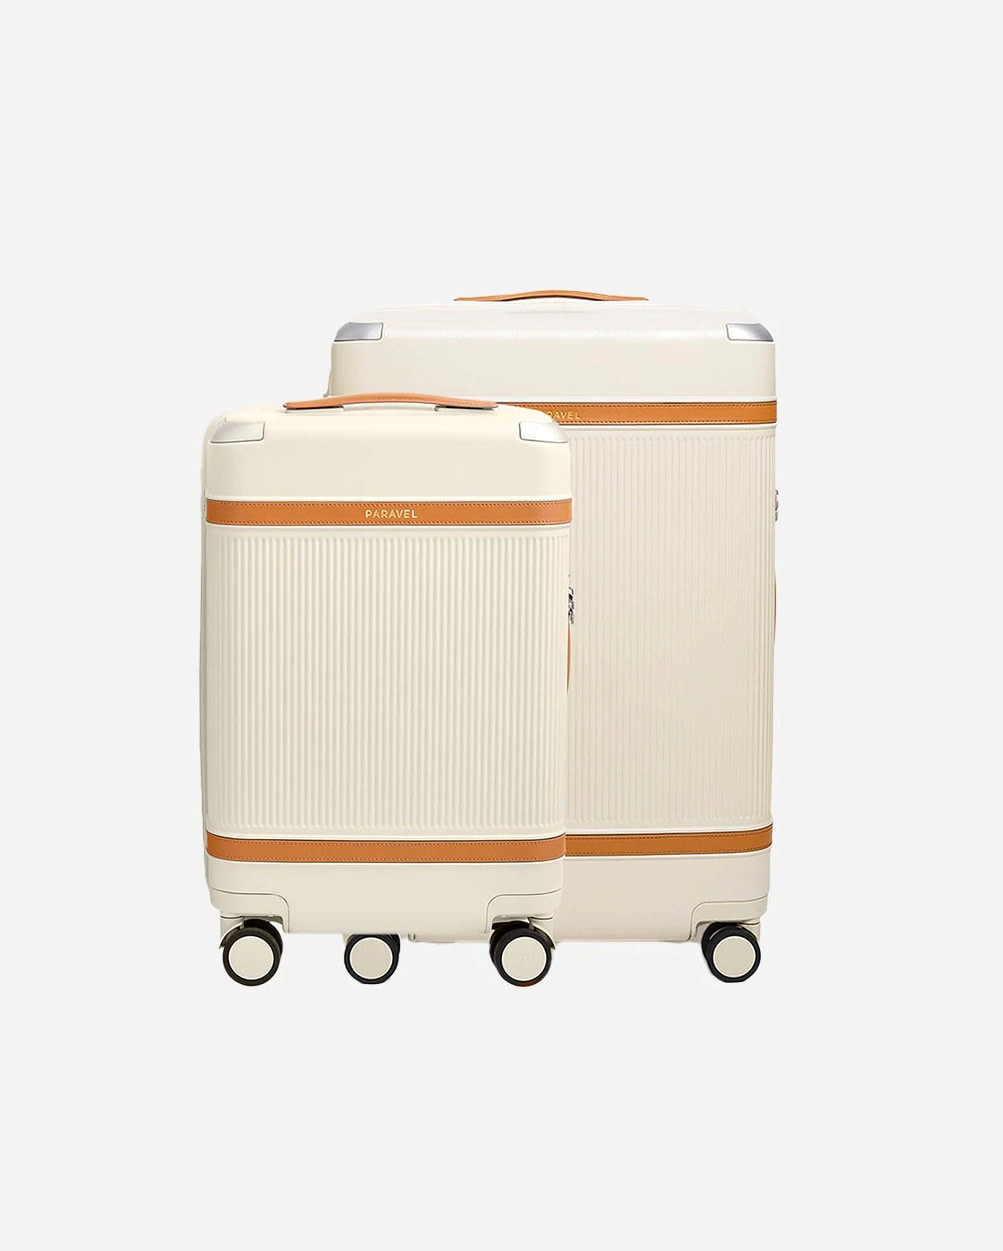 Retro-insipred luggage set